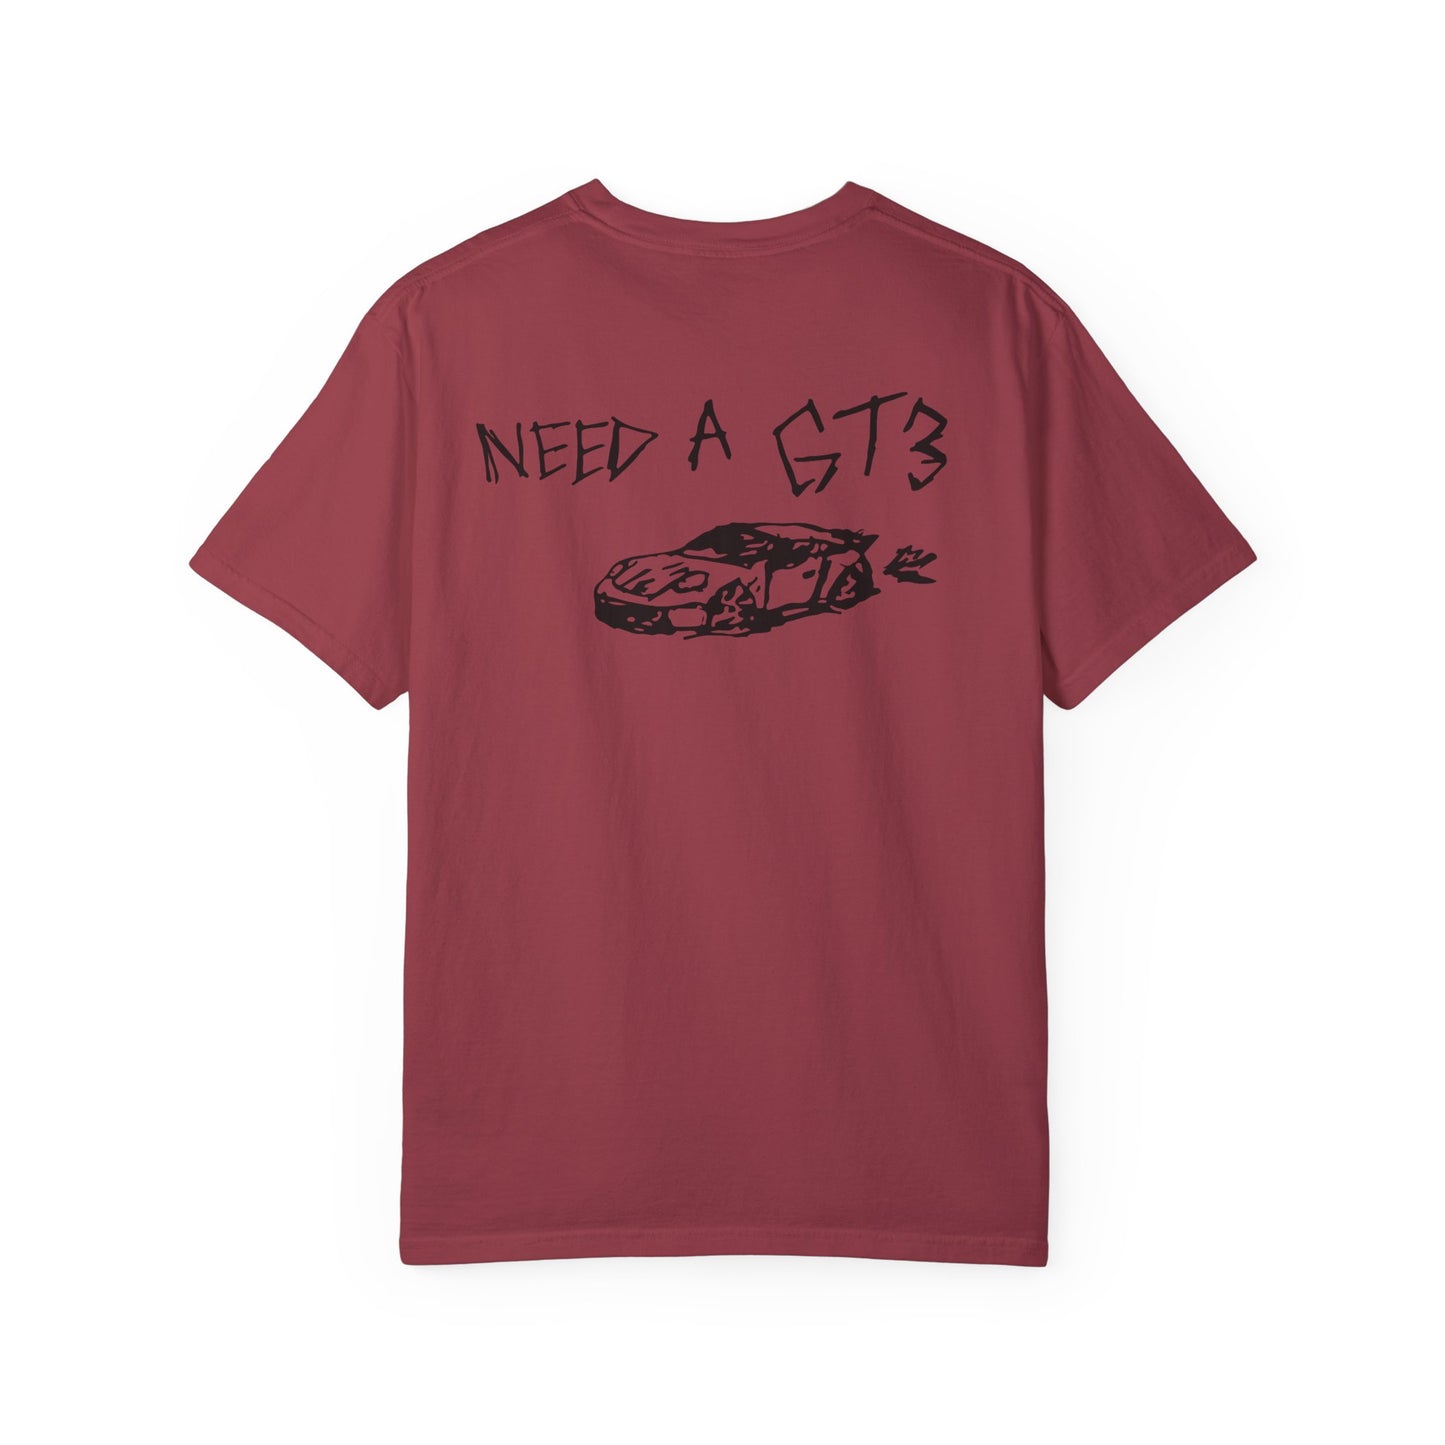 'Need GT3' T-Shirt